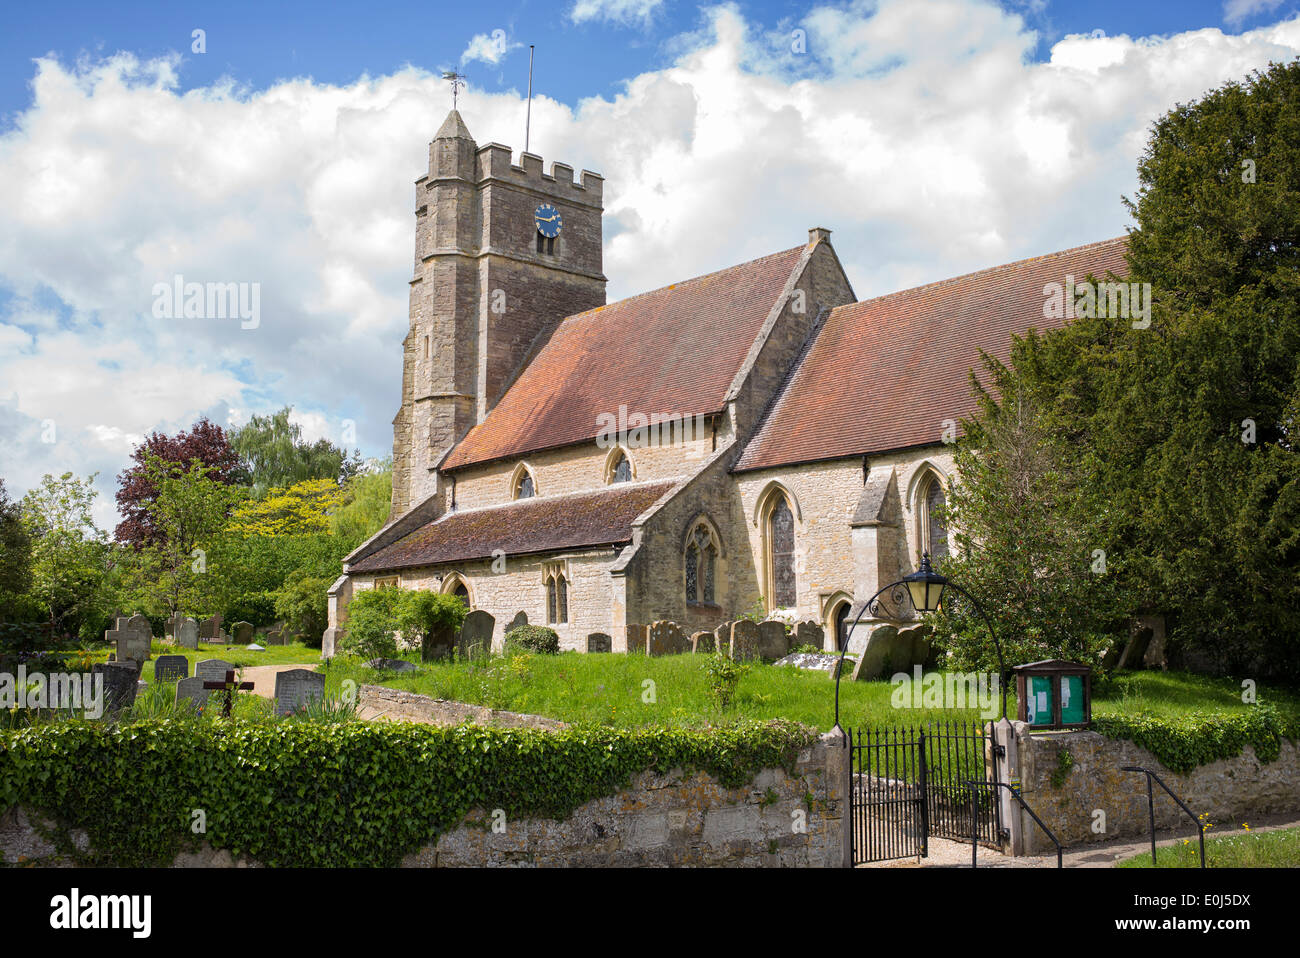 St John the Baptist parish church in Stanton St. John, Oxfordshire, England Stock Photo